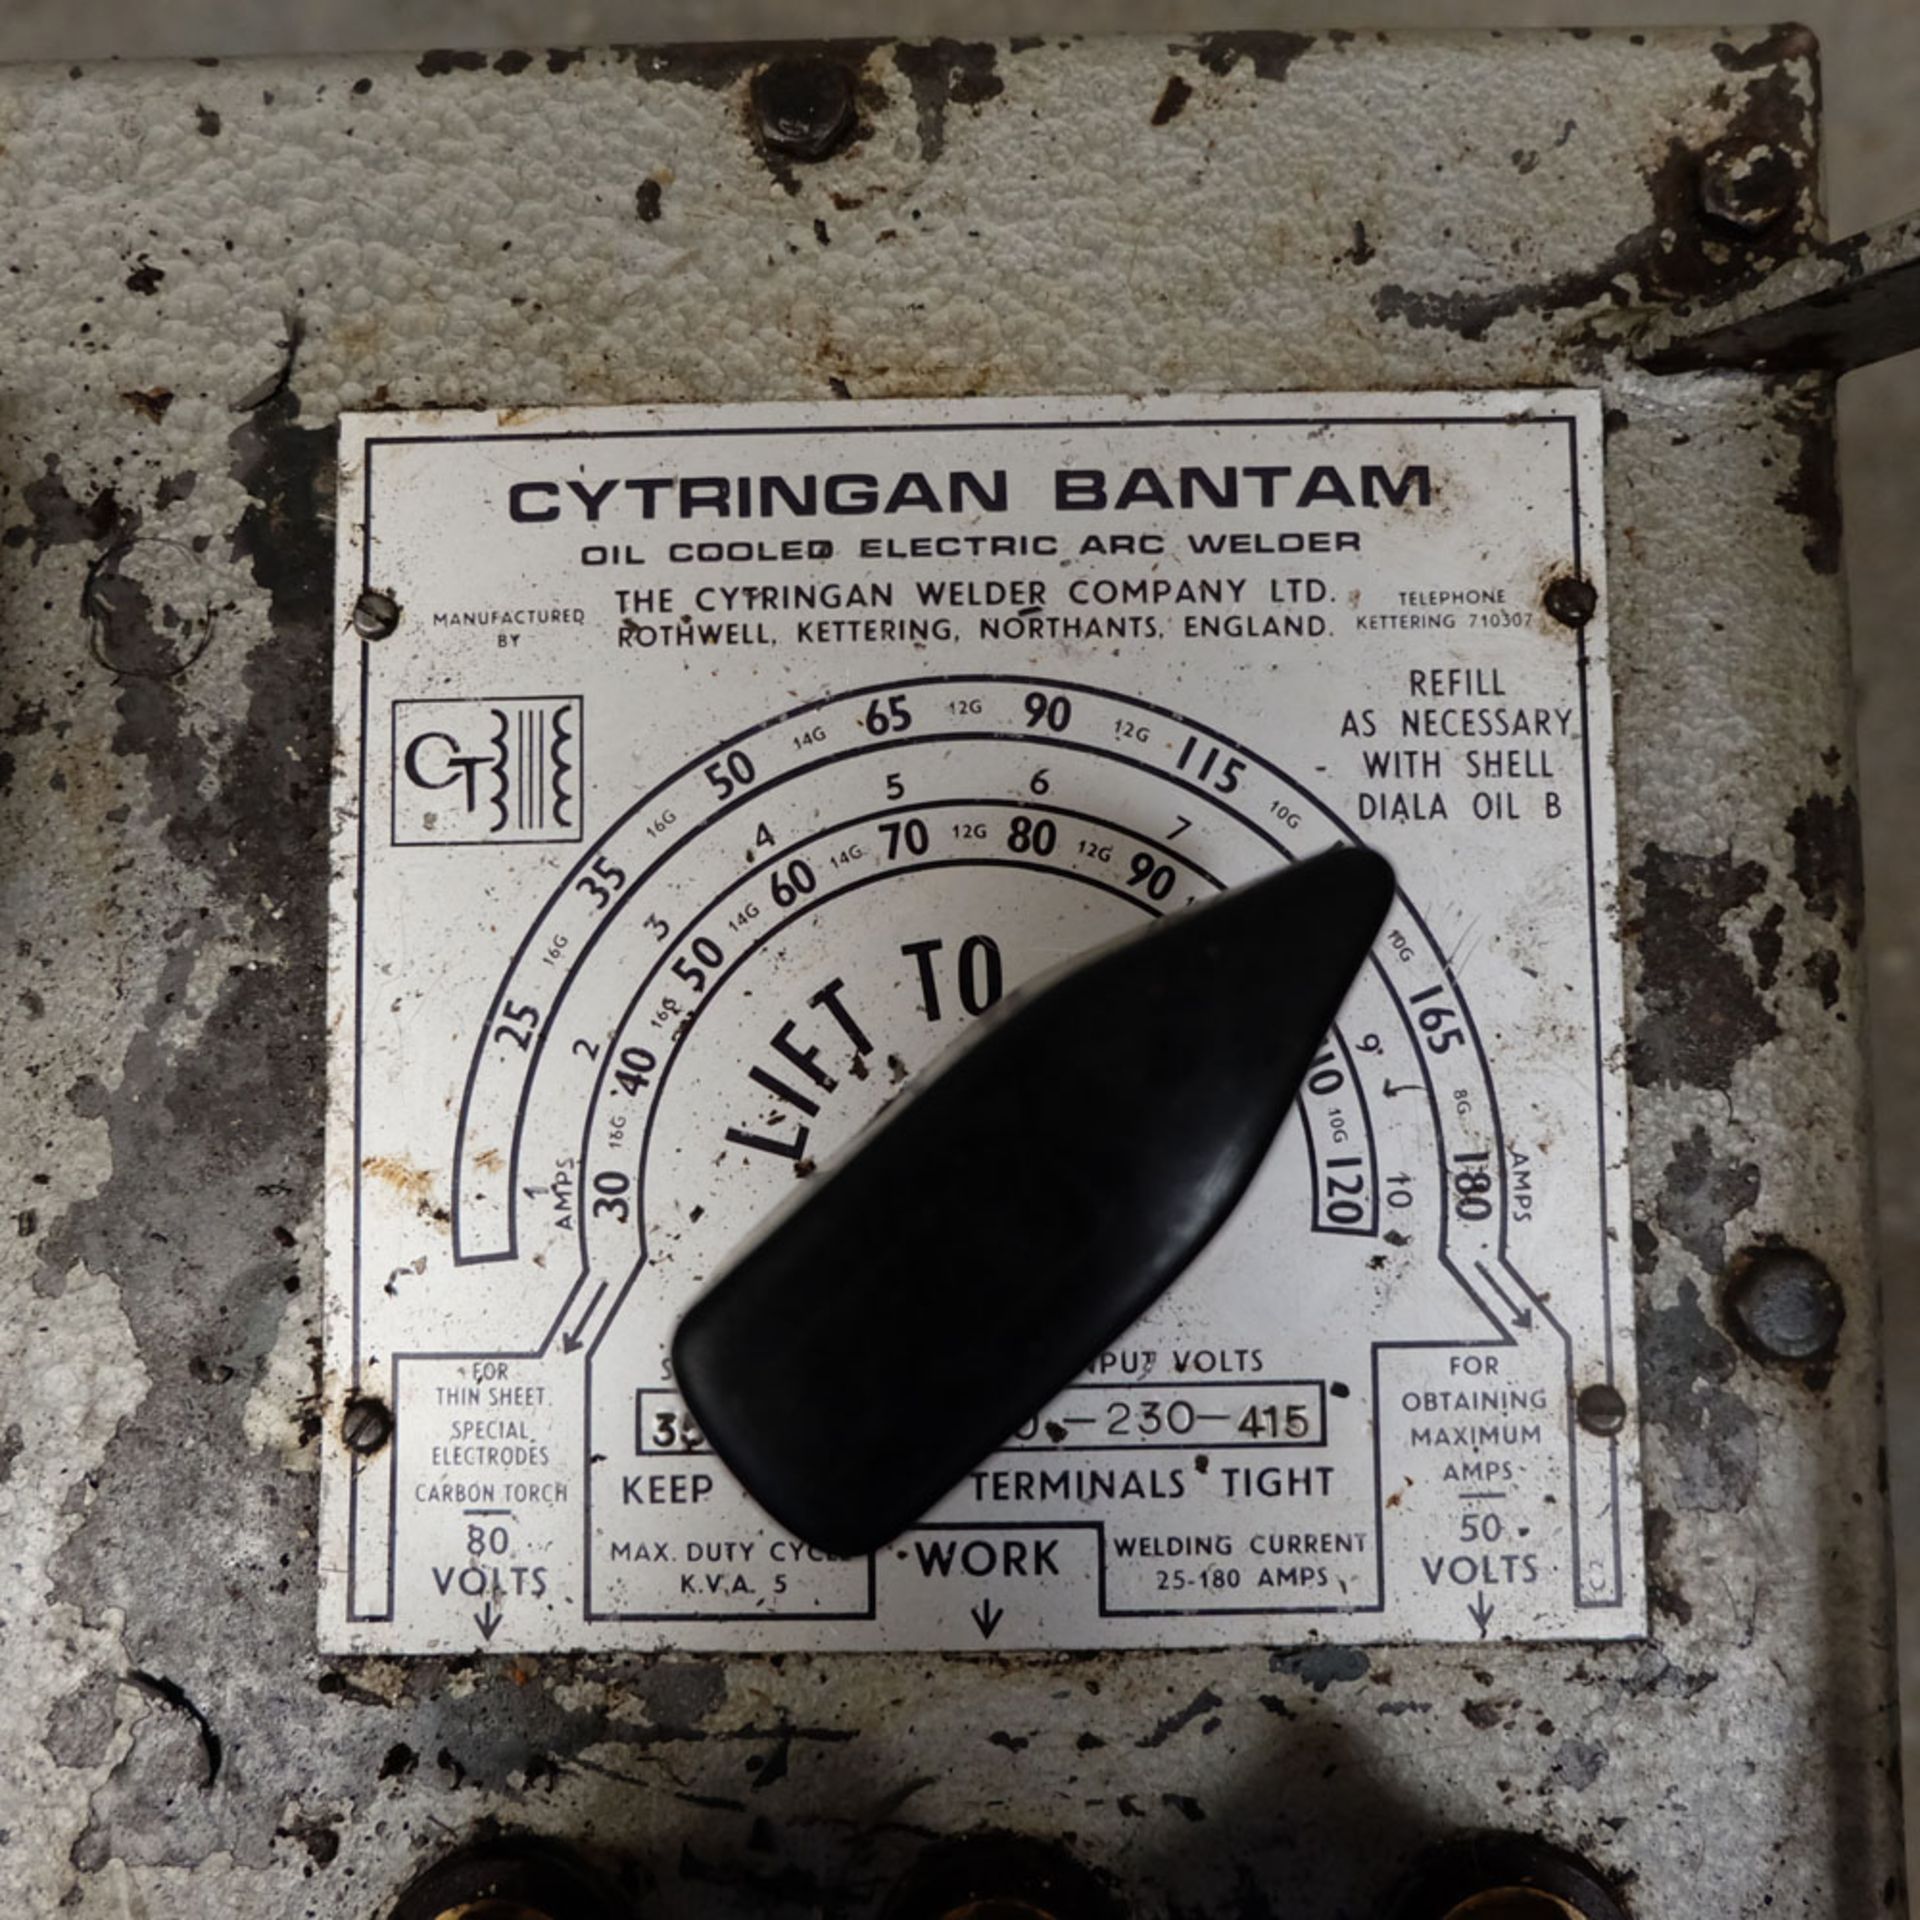 Cytringan Bantam Oil Cooled Electric Arc Welder. - Image 4 of 5